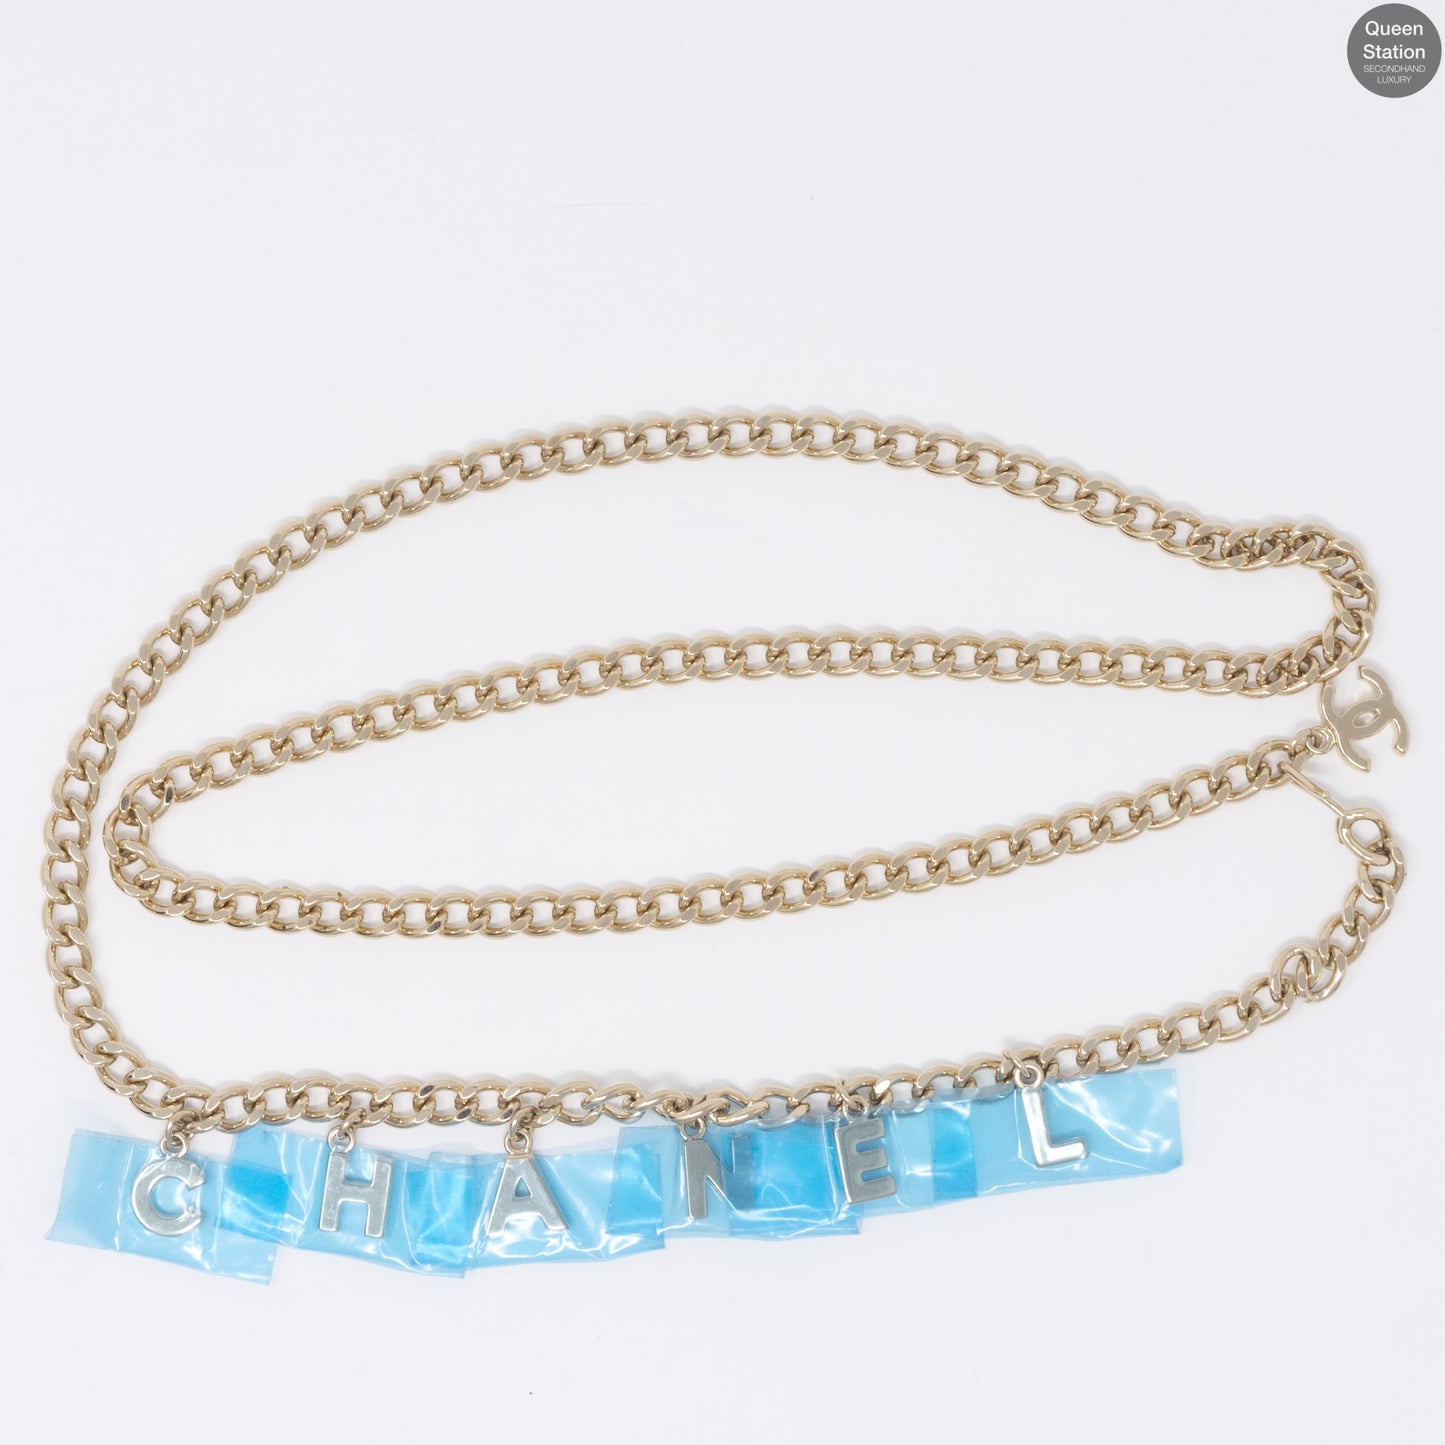 CC Silver Chain Letters Belt & Necklace